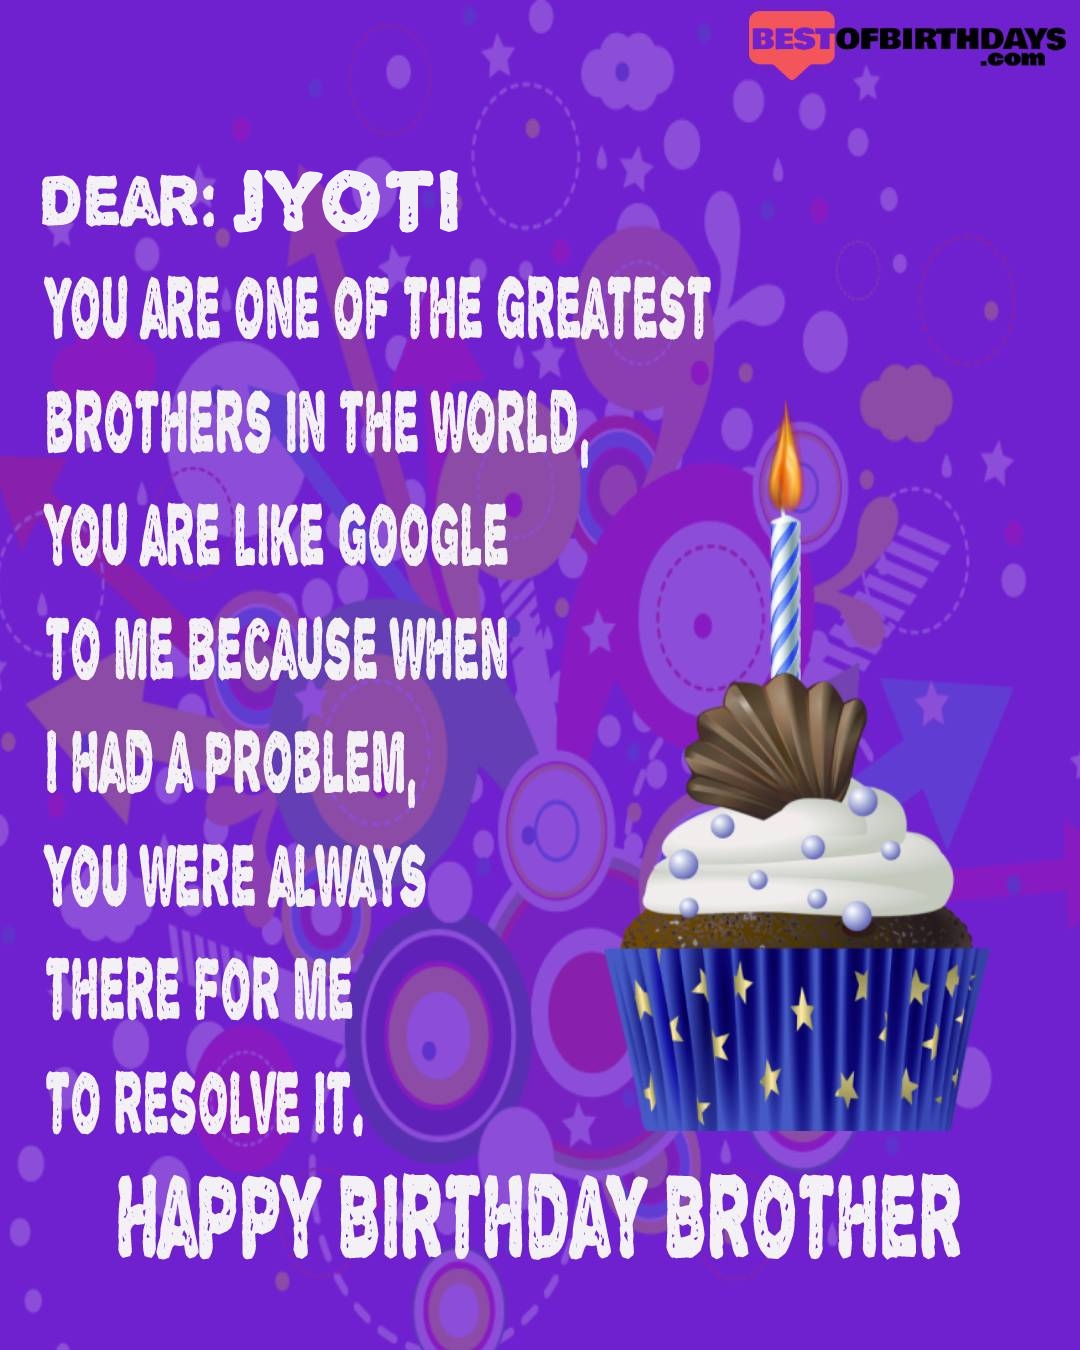 Happy birthday jyoti bhai brother bro